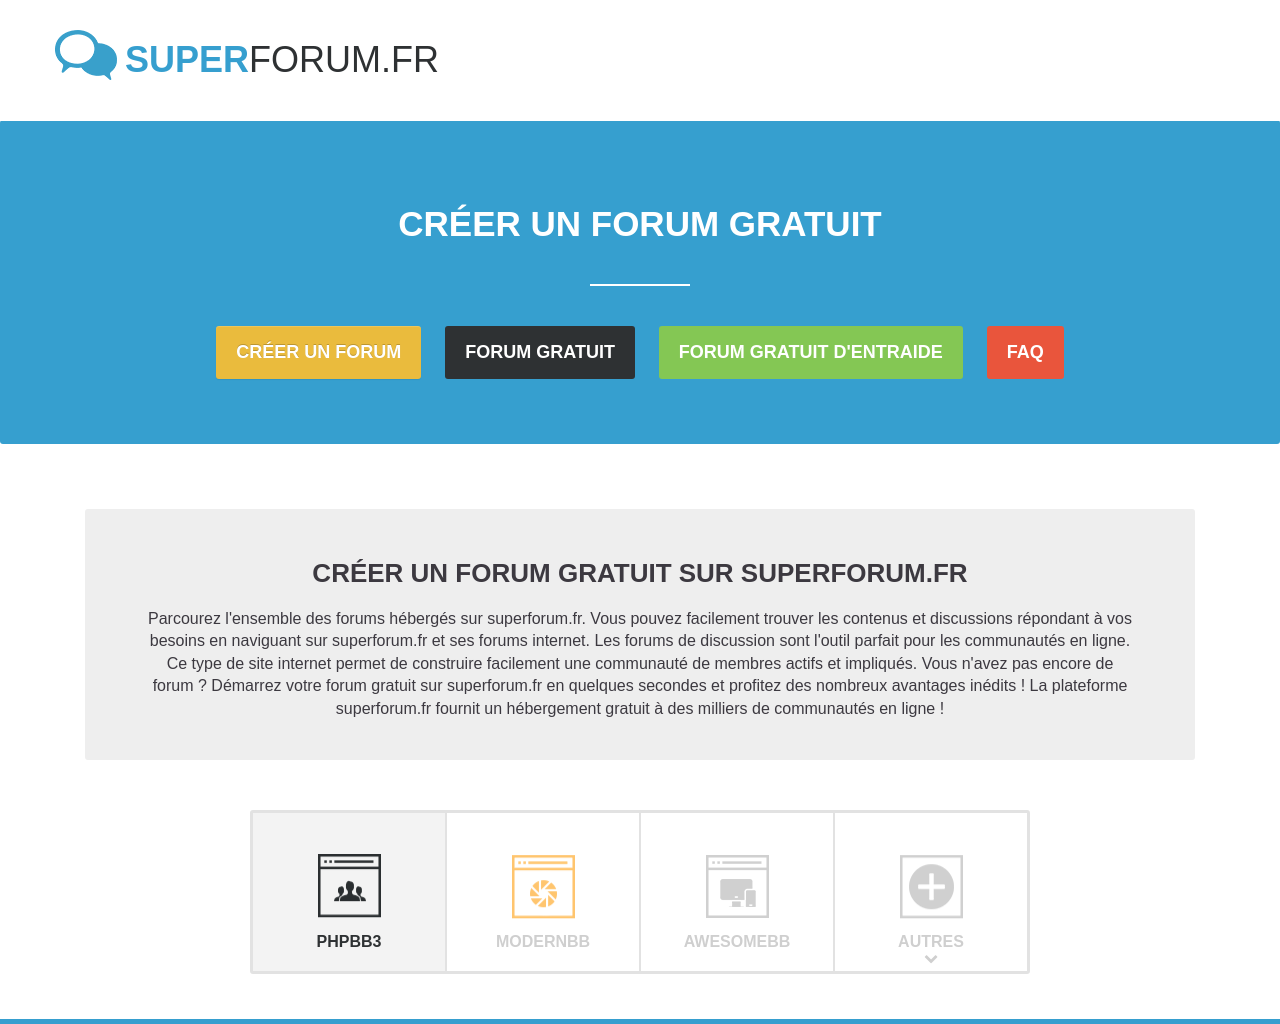 superforum.fr